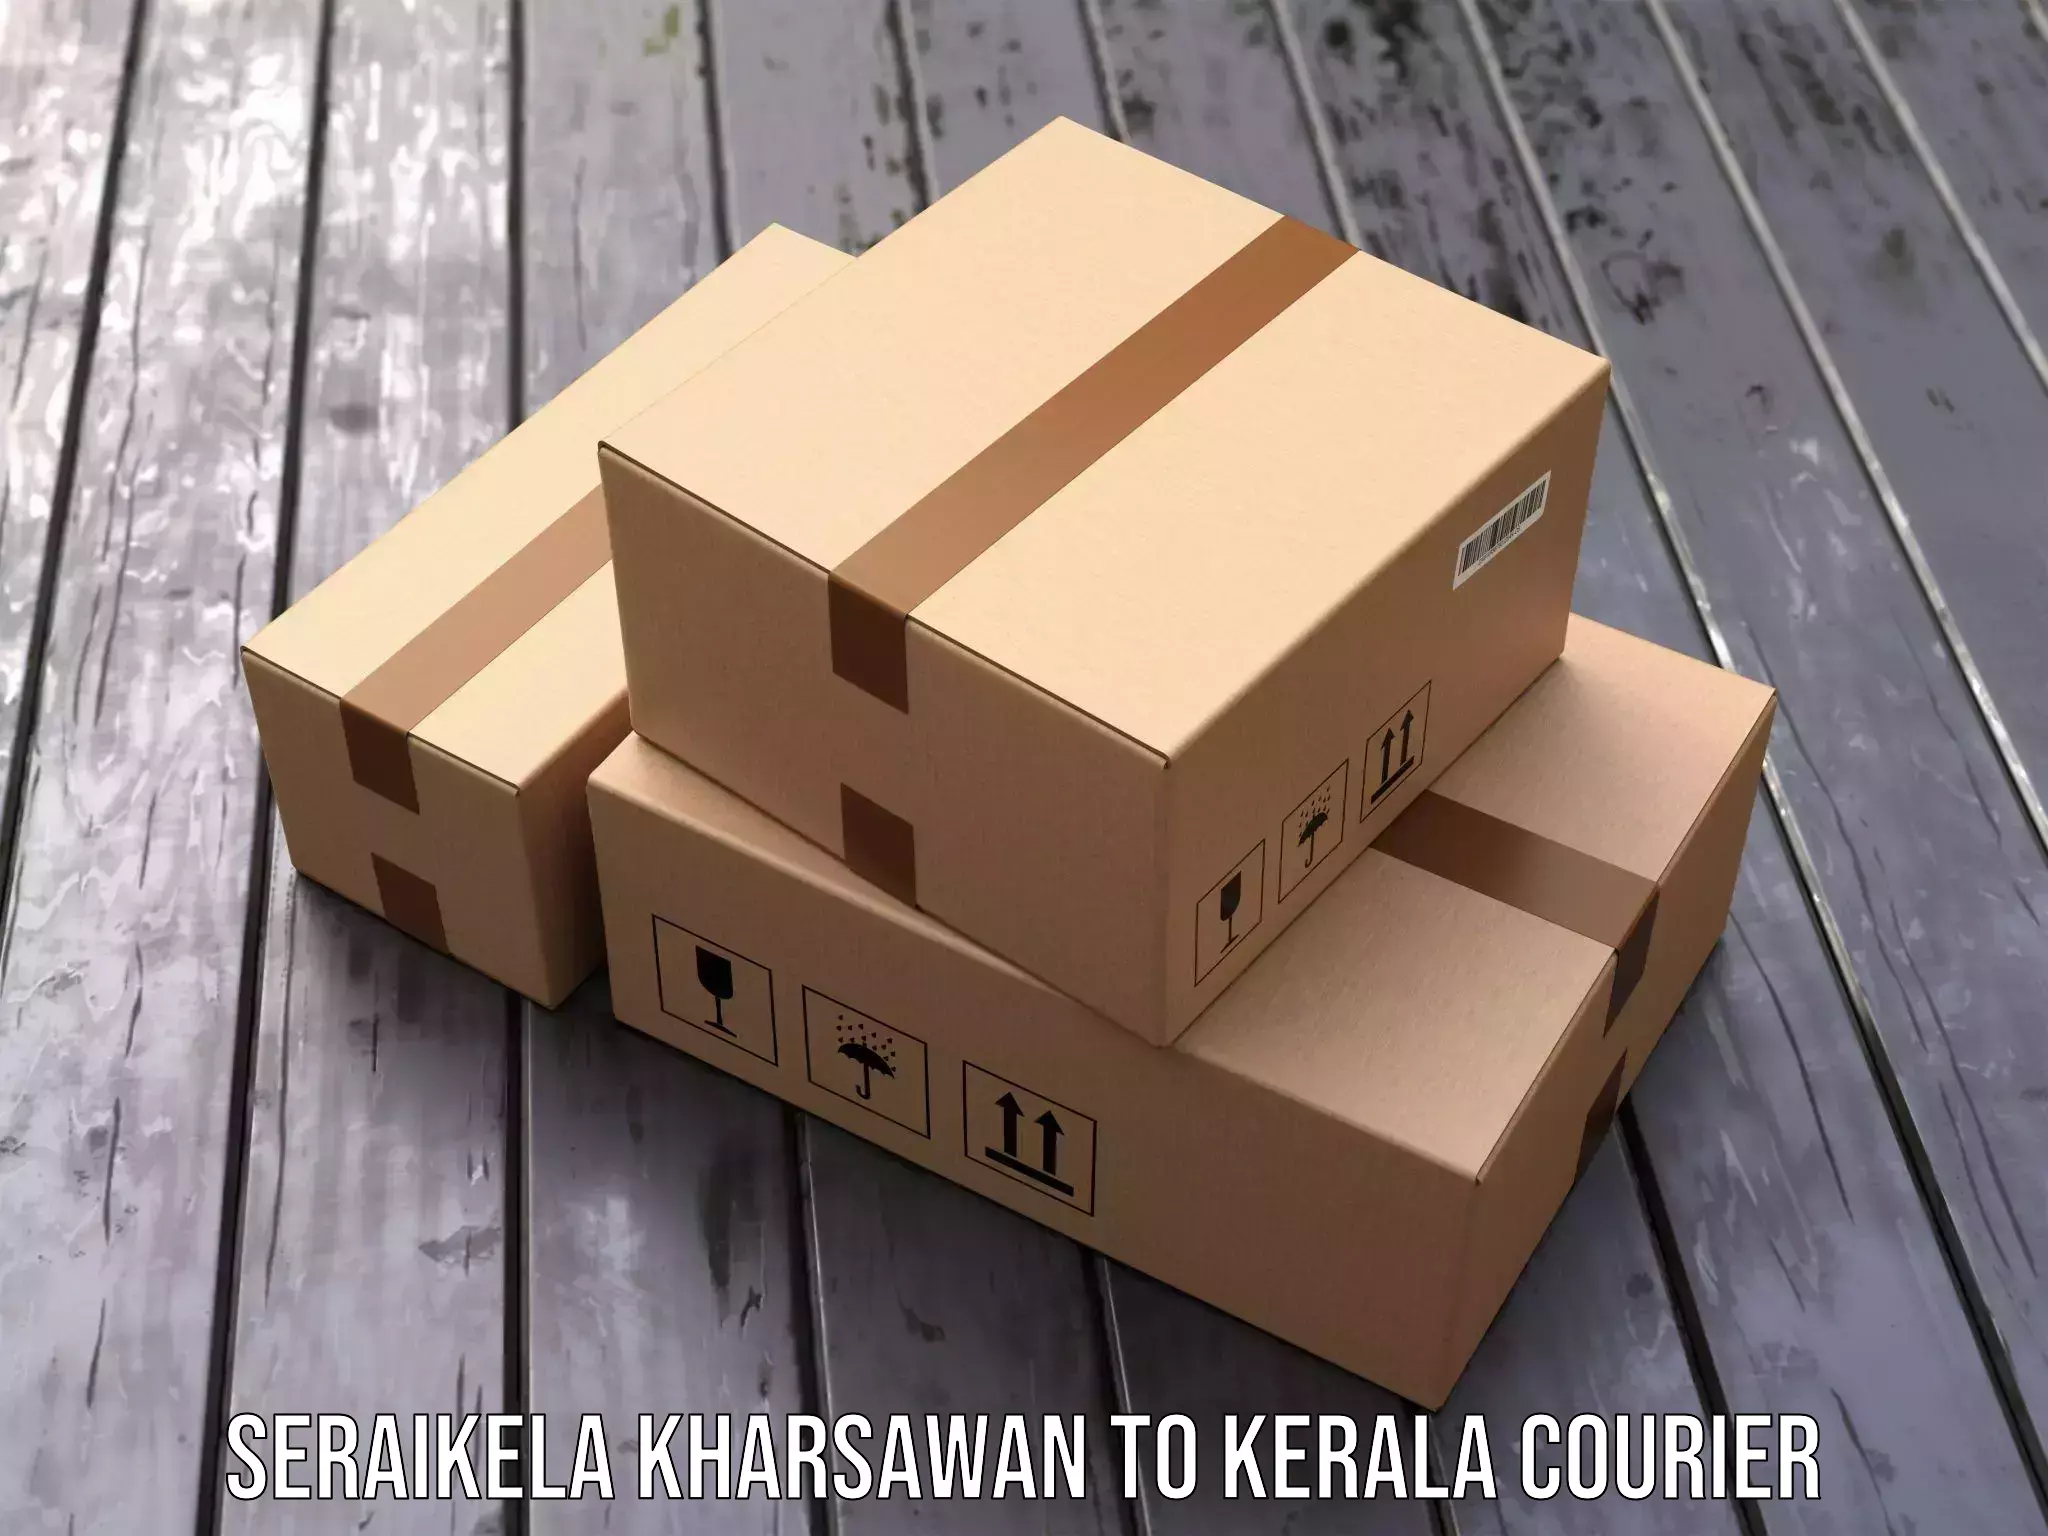 Same-day delivery options Seraikela Kharsawan to Palakkad